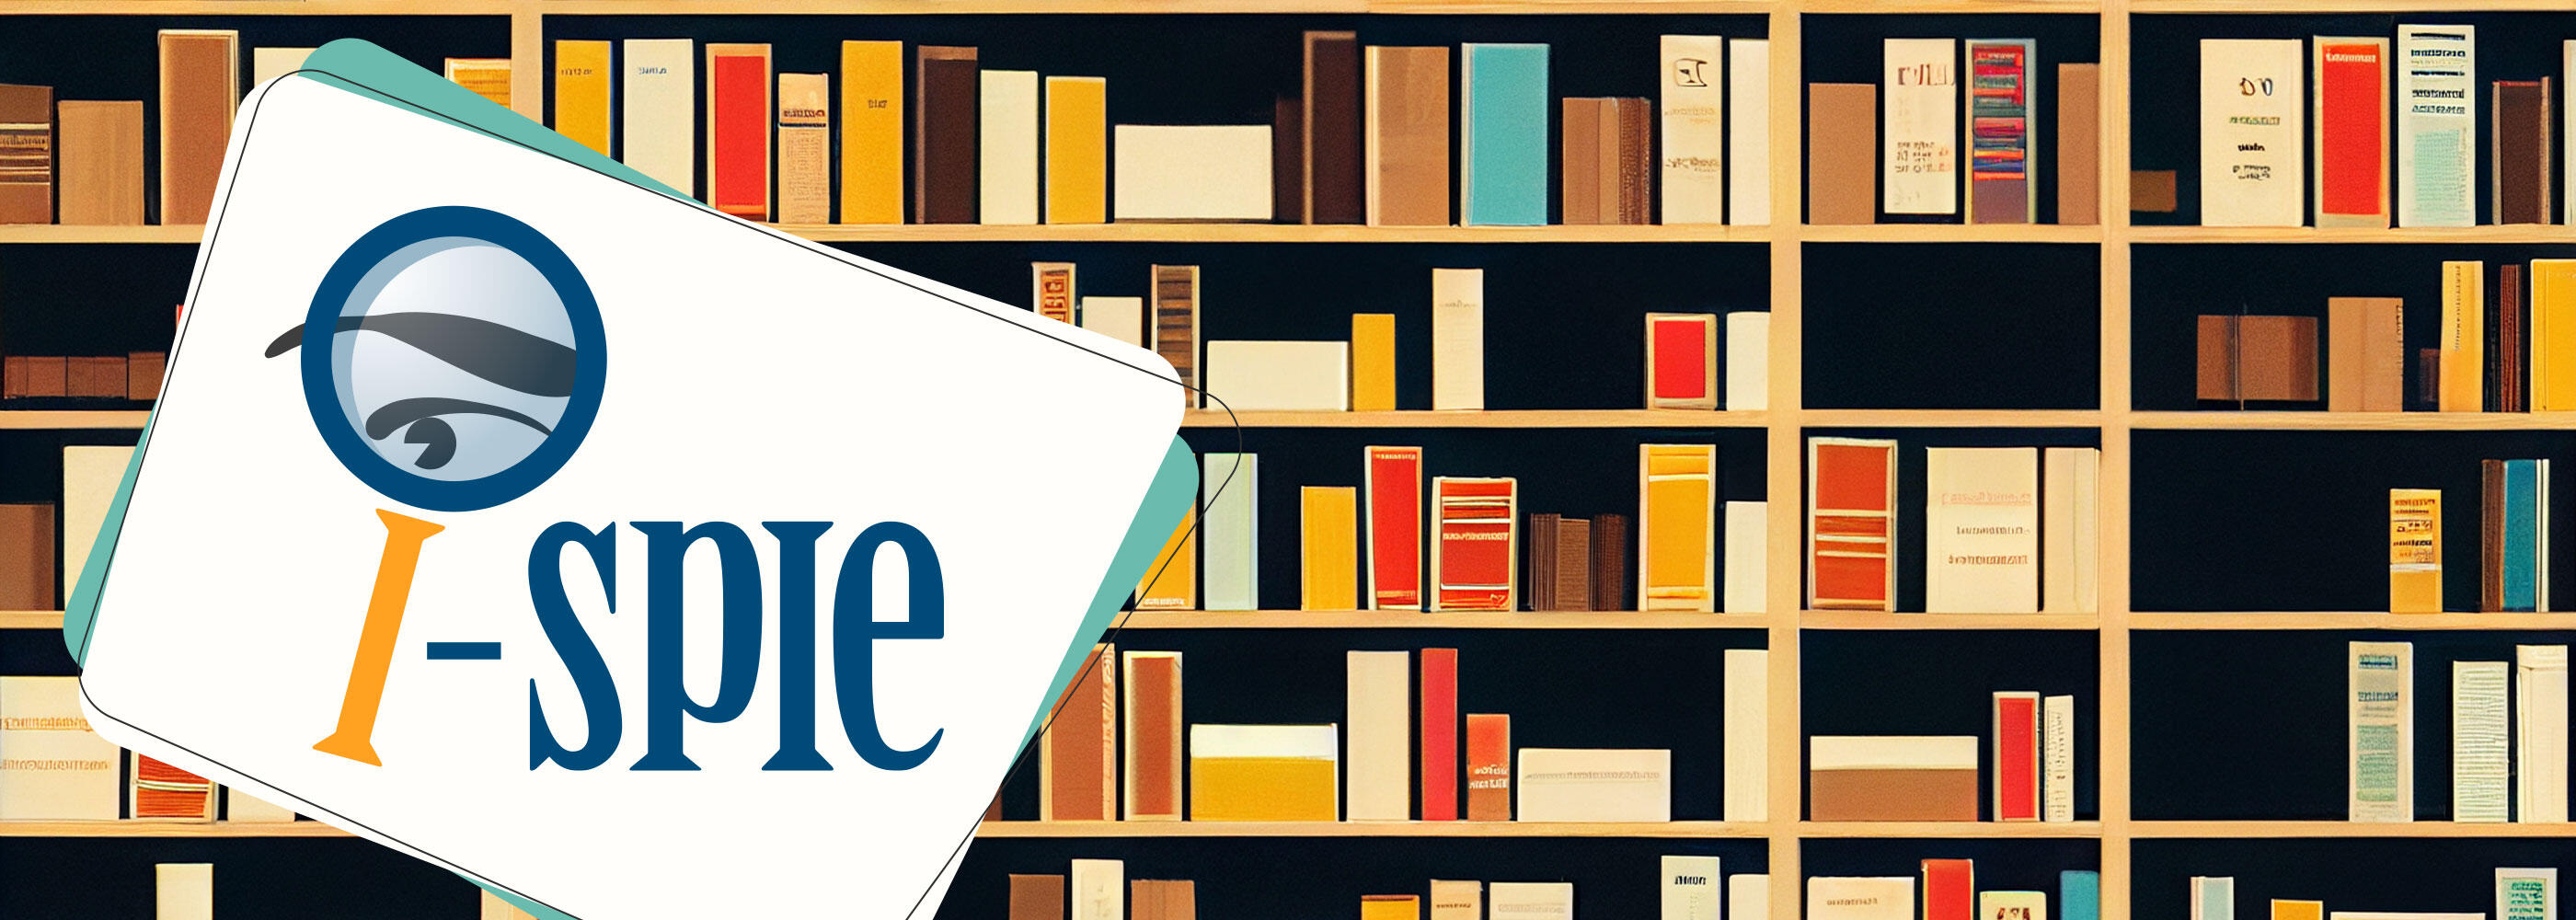 Illustration of library shelves with i-spie logo